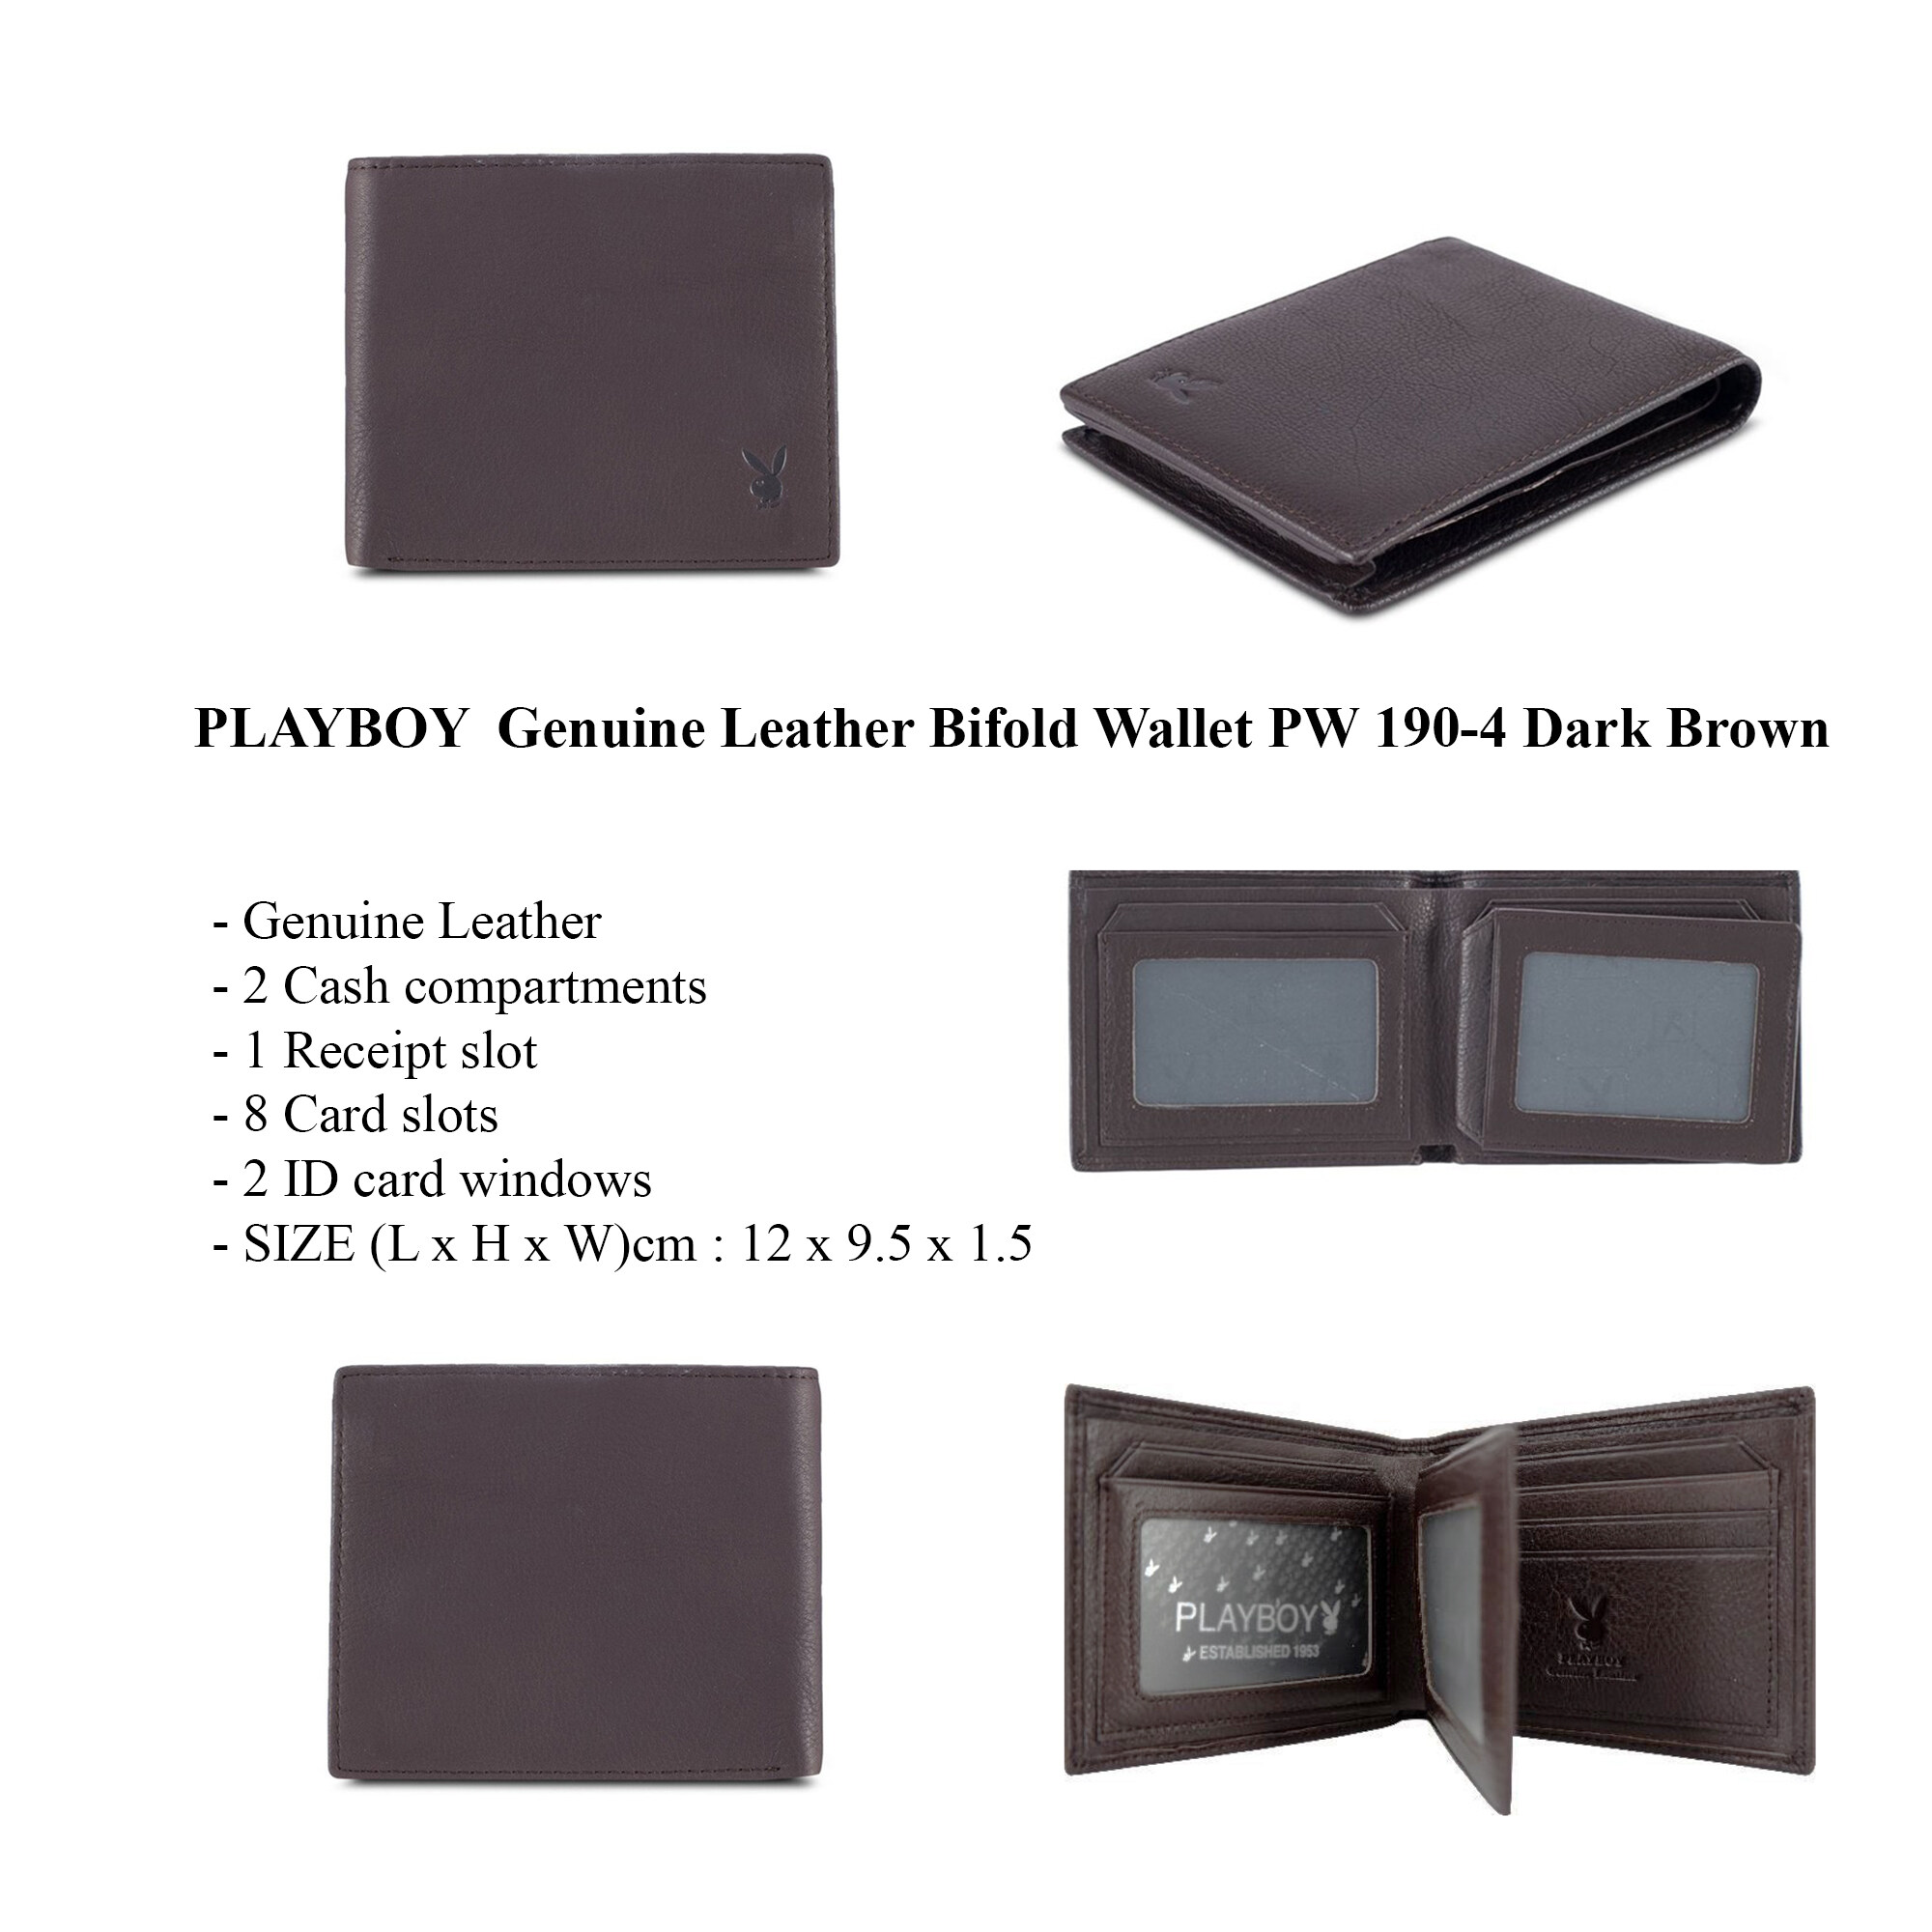 Playboy Genuine Leather Long Wallet / Bifold Wallet PW 189/ PW 190 Dark Brown